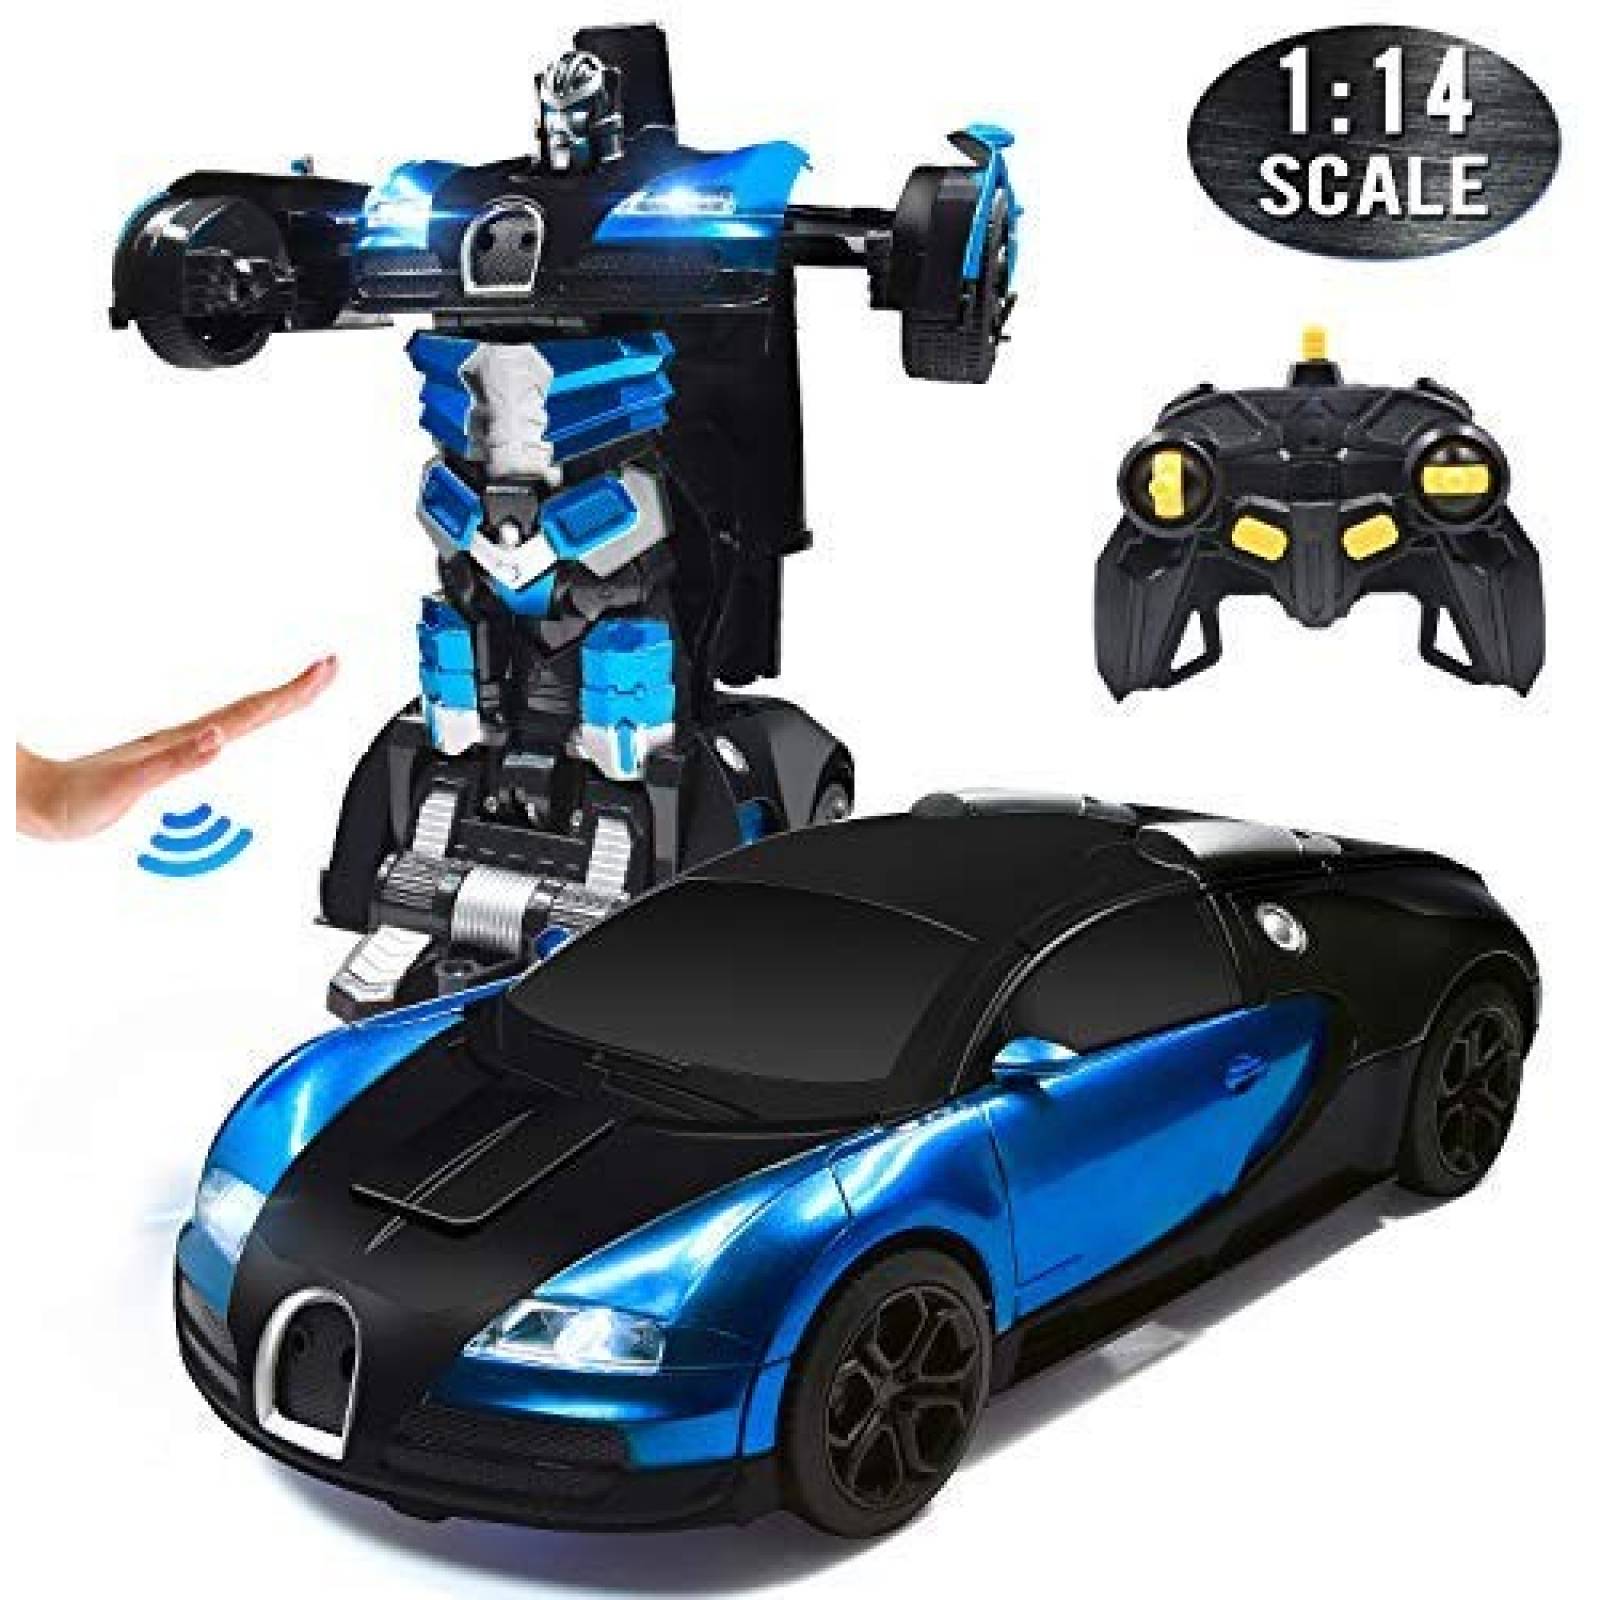 Robot Trimnpy Transformers 1:14 360 Grados con Control -Azul